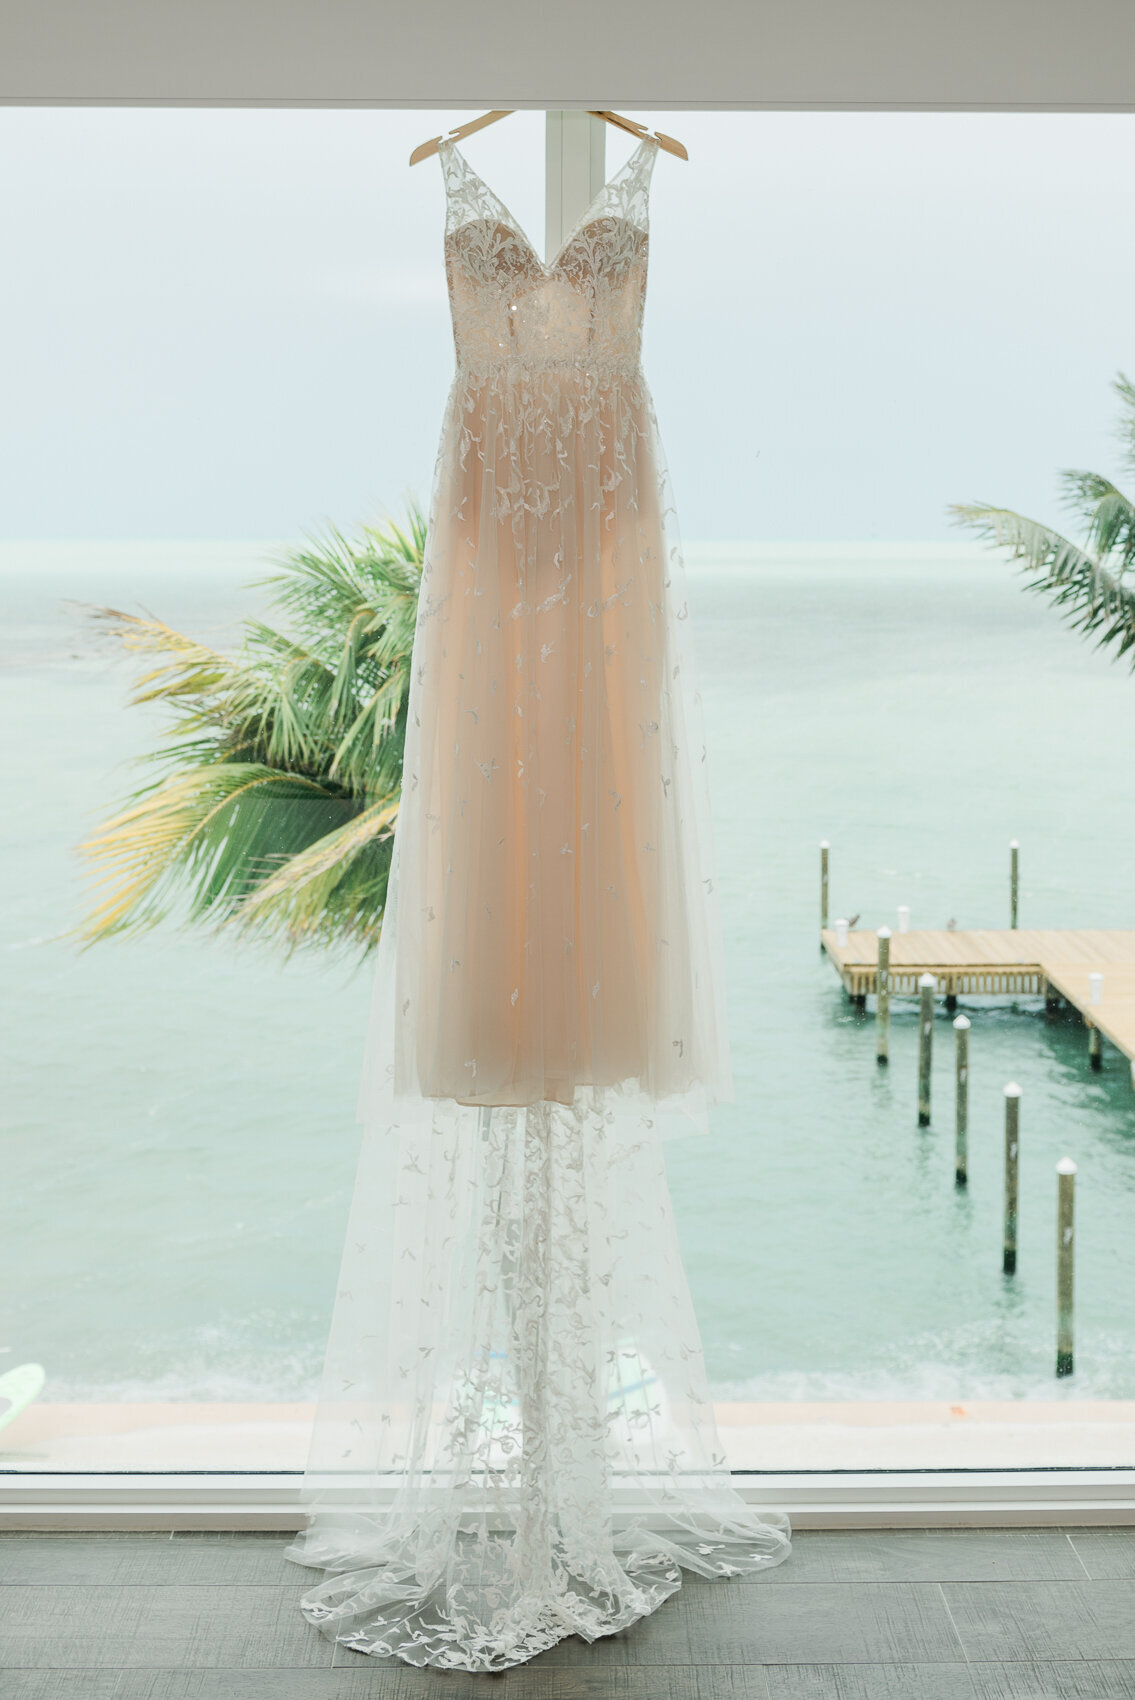 amara cay resort wedding dress hanging